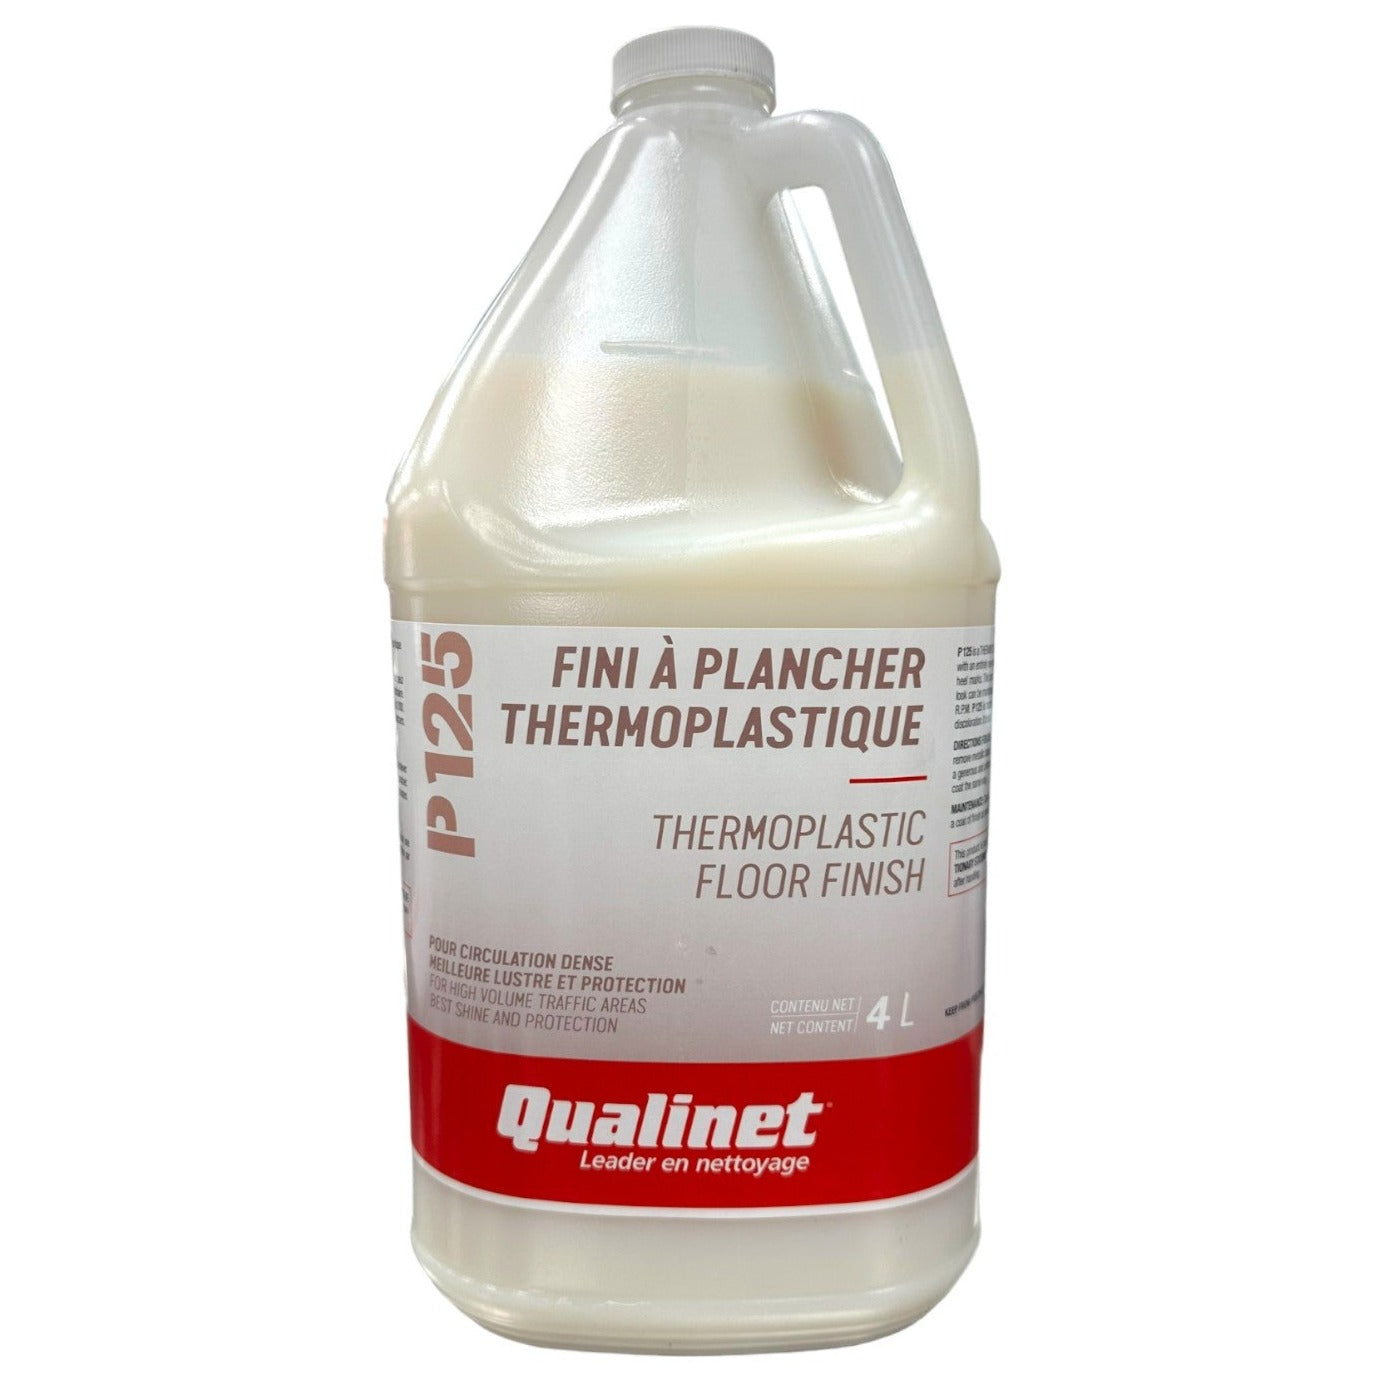 Fini à plancher thermoplastique (2 formats) - P125 - Miranet